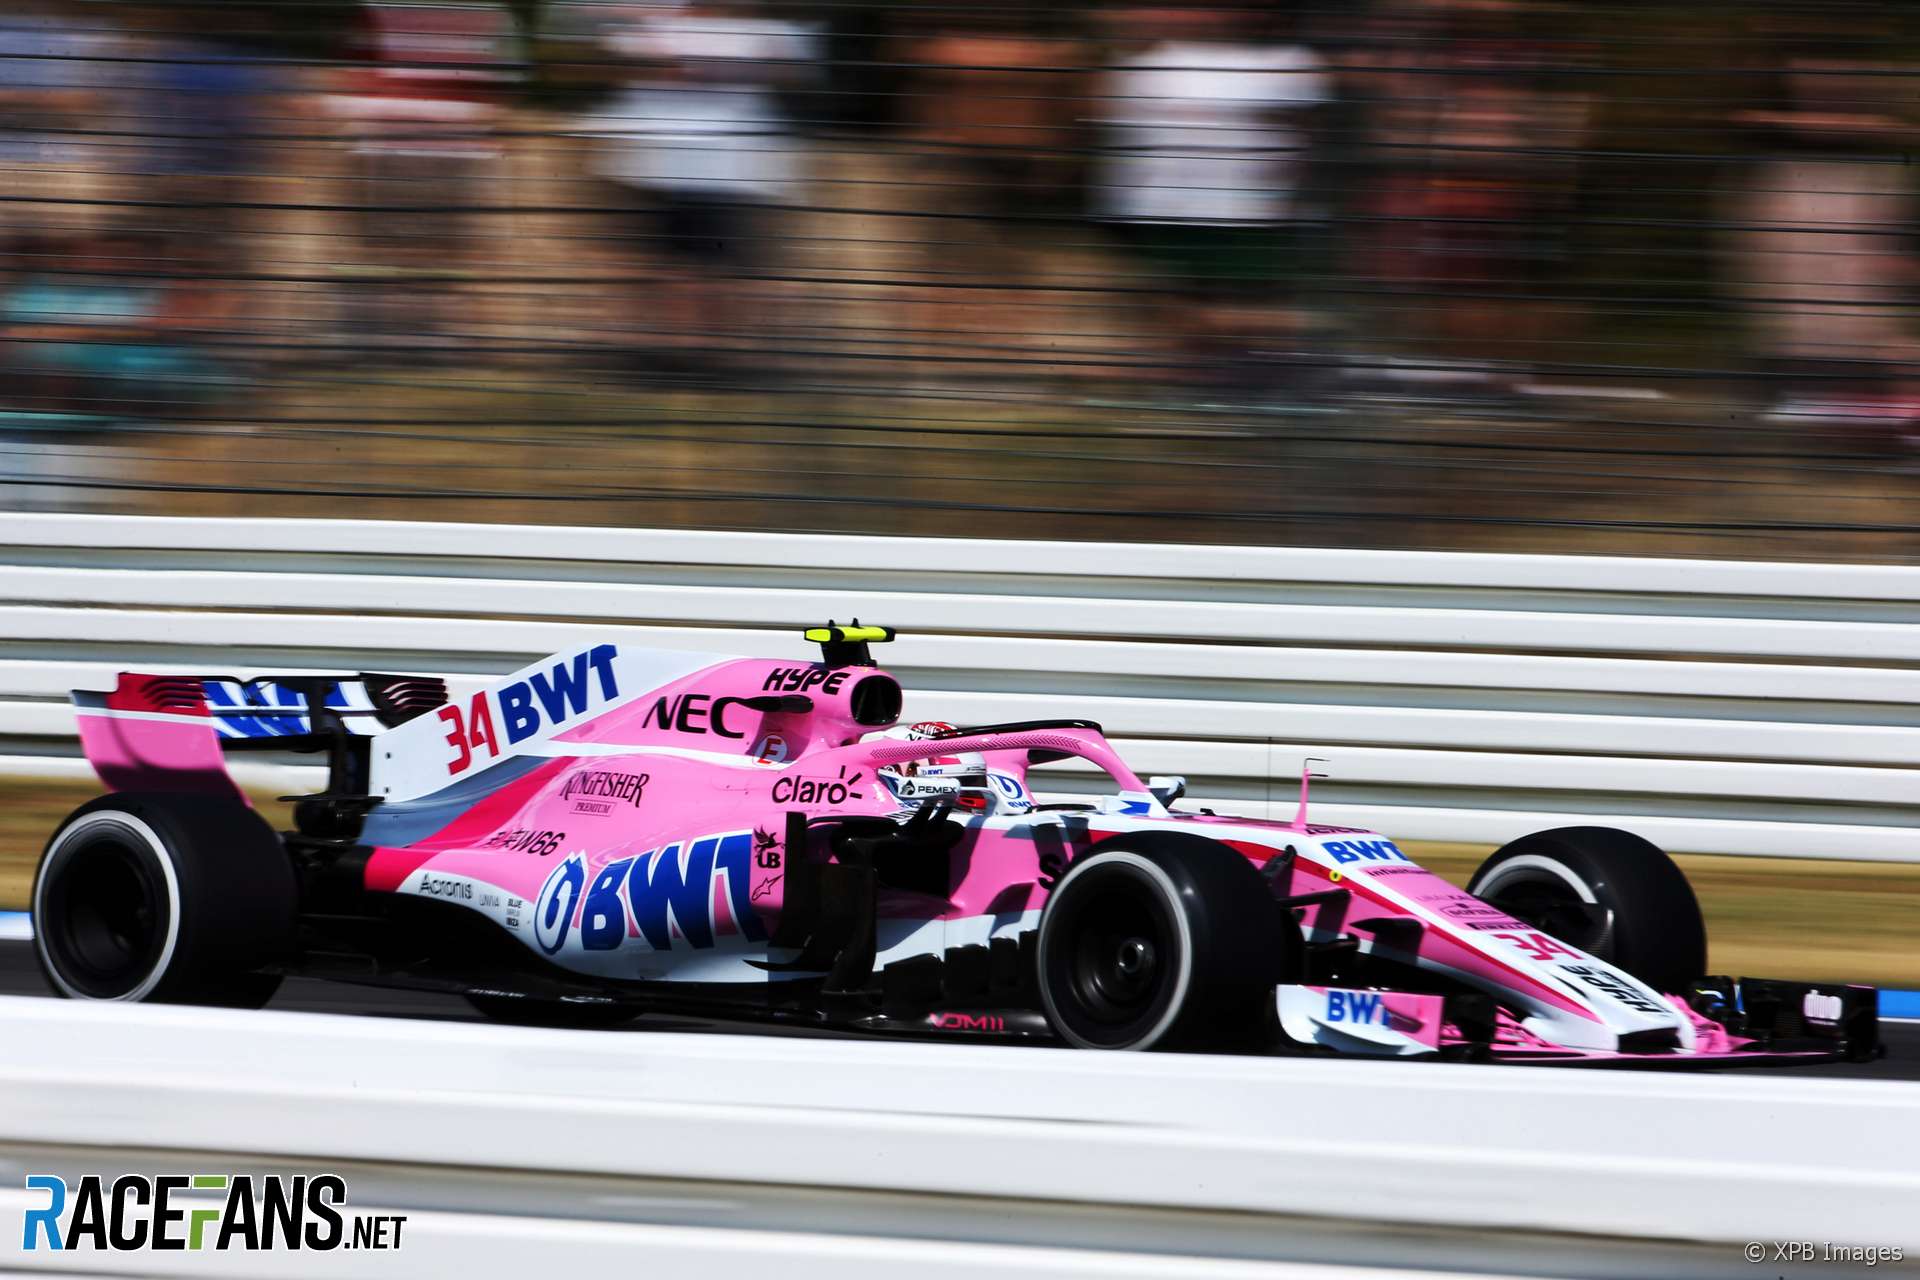 Nicholas Latifi, Force India, Hockenheimring, 2018